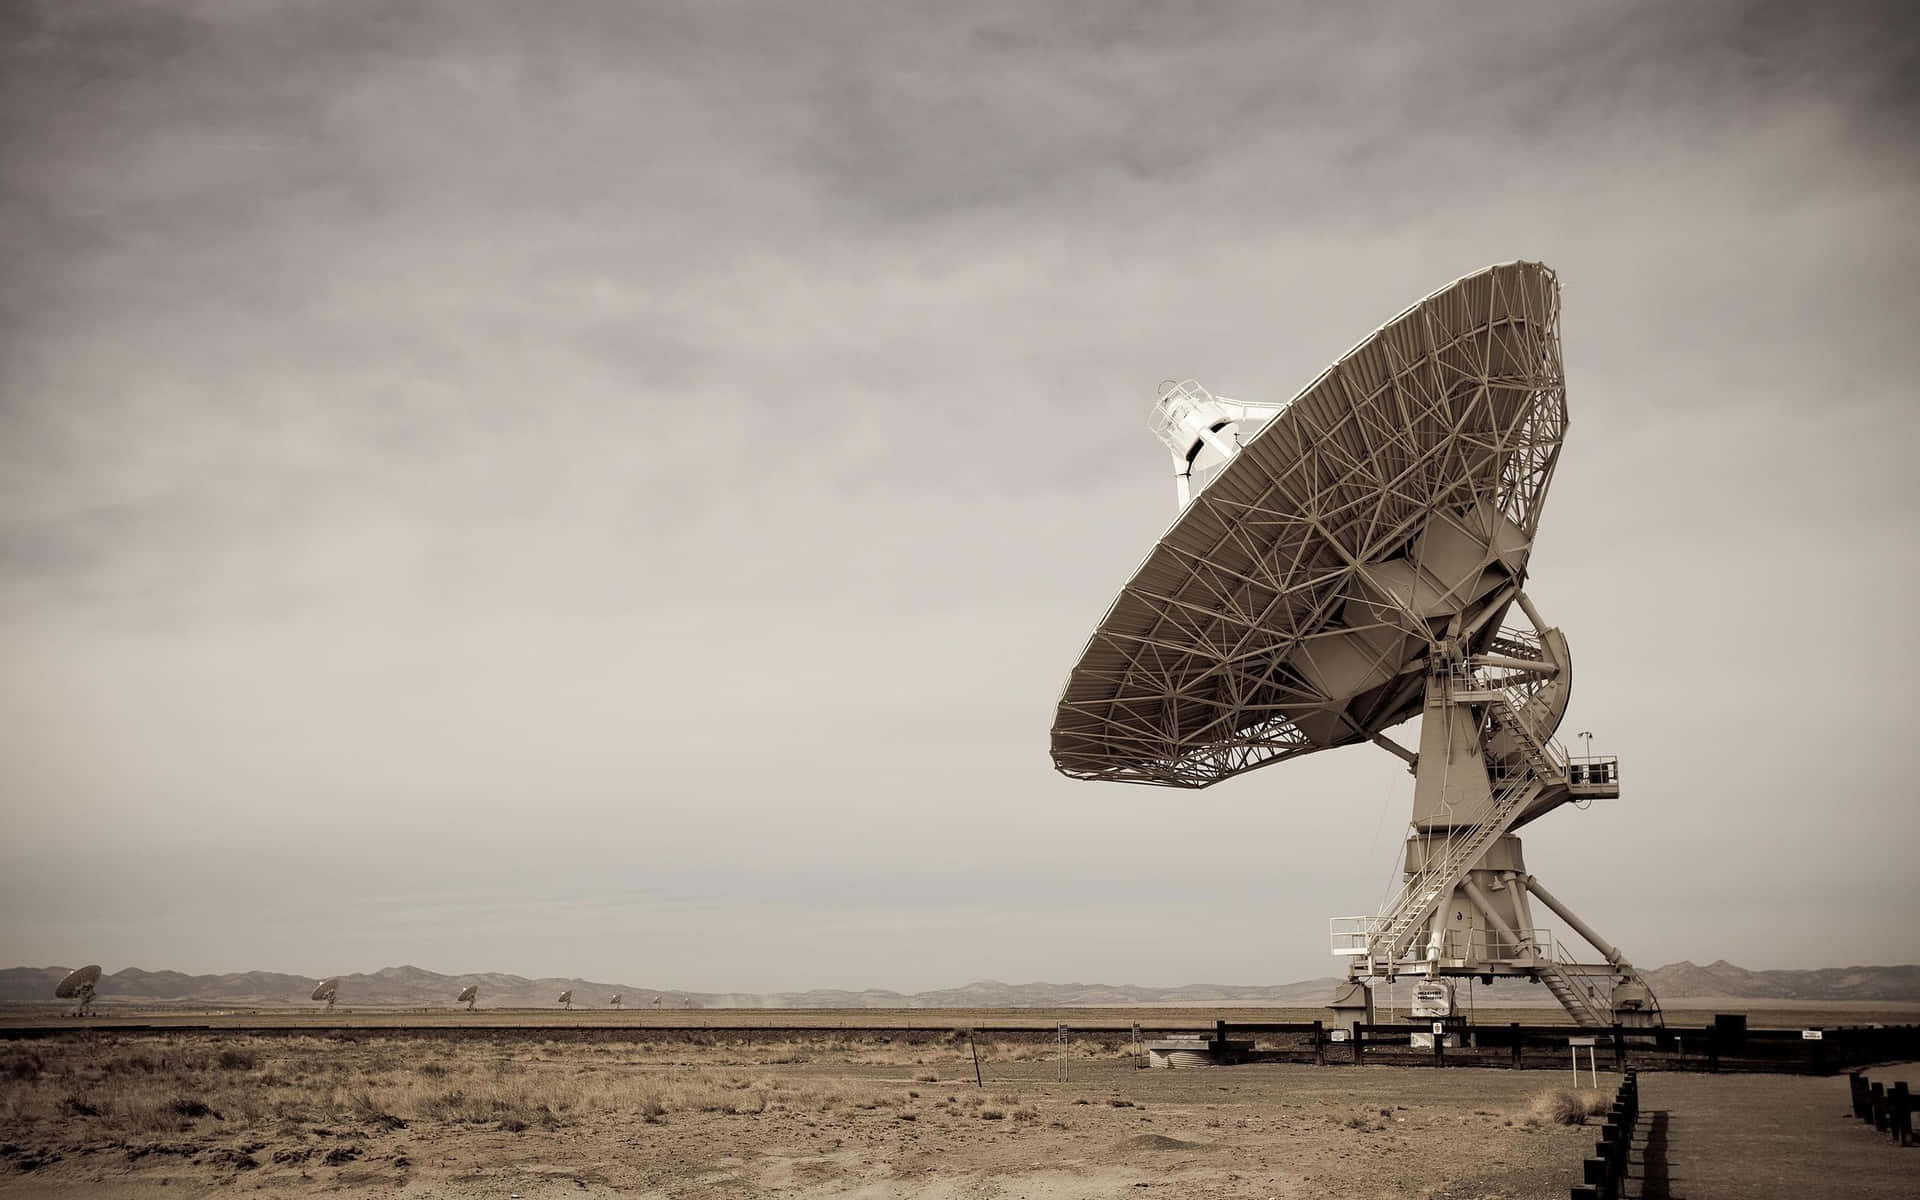 a large radio telescope in the desert